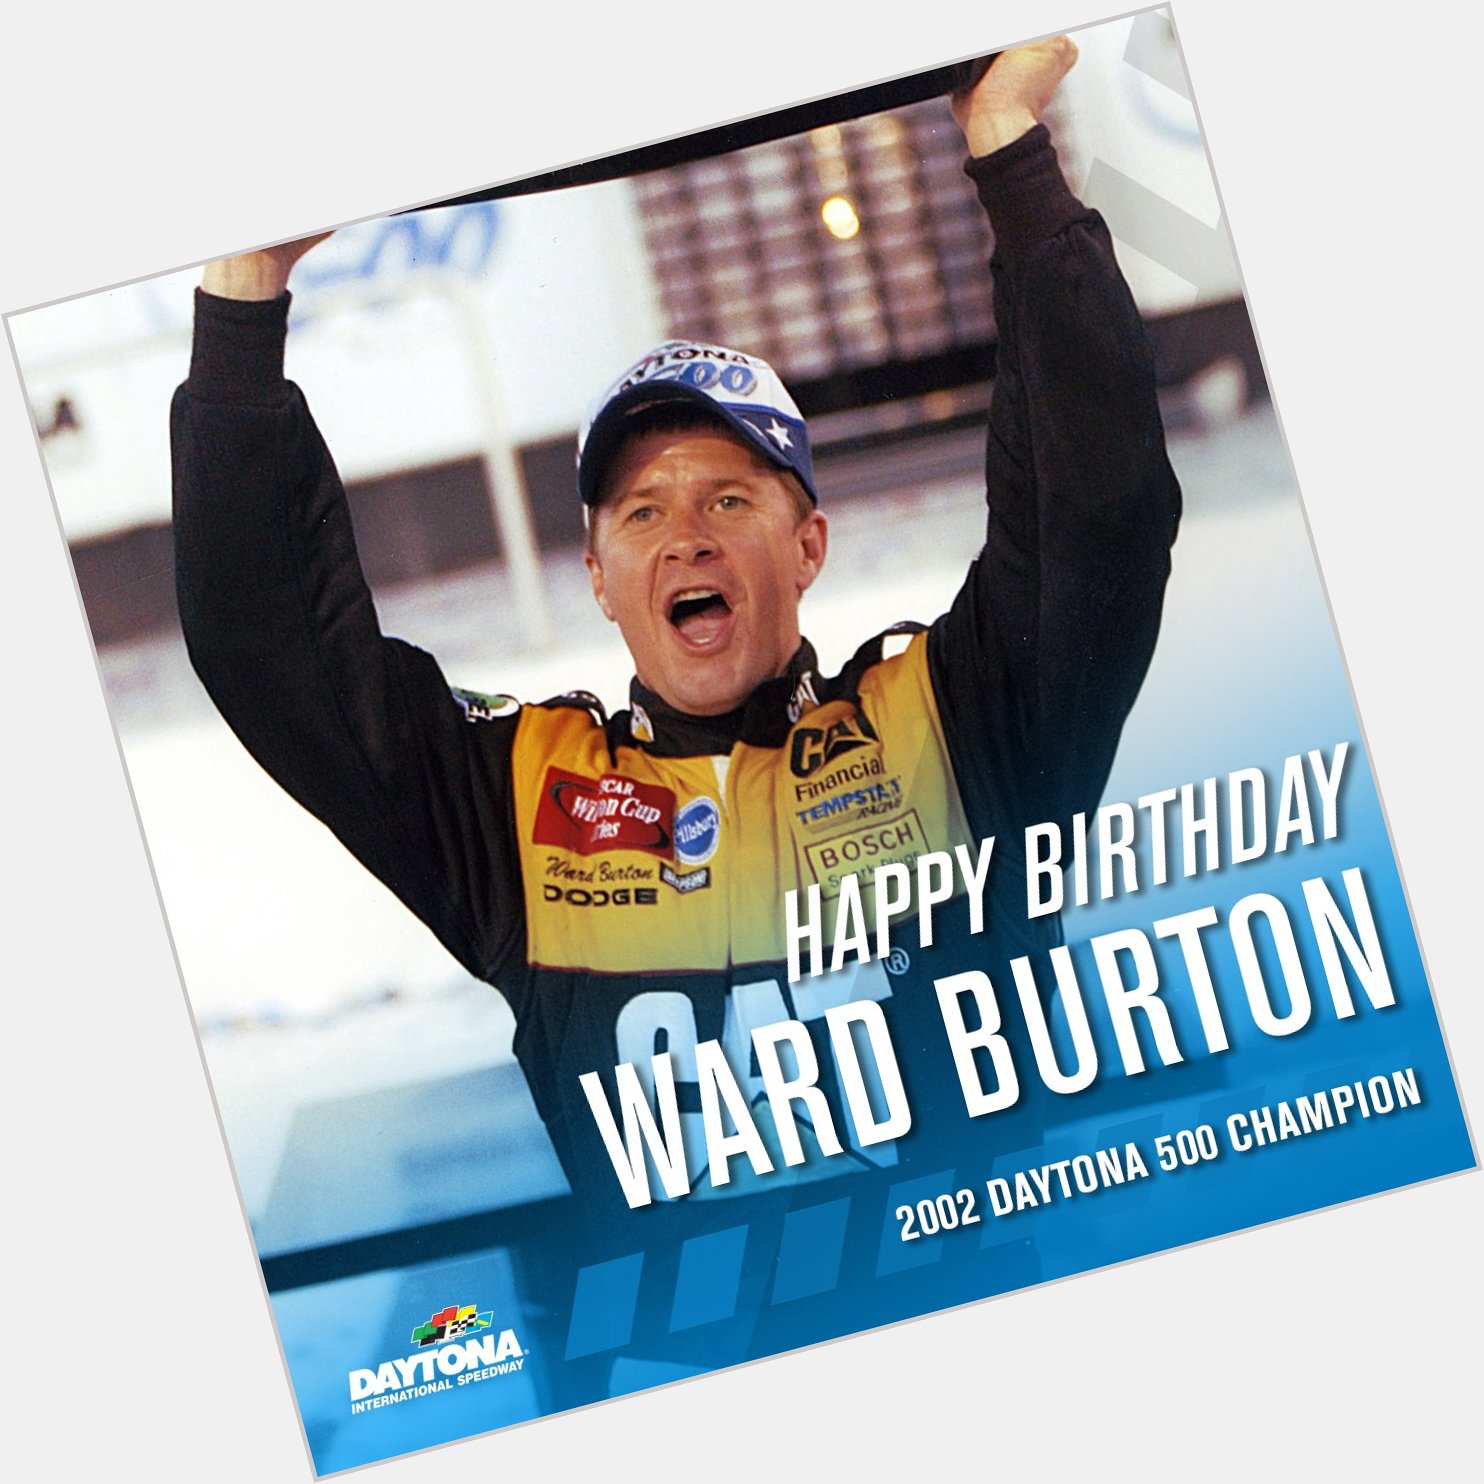 Help us wish a happy birthday to 2002 Champion Ward Burton!   